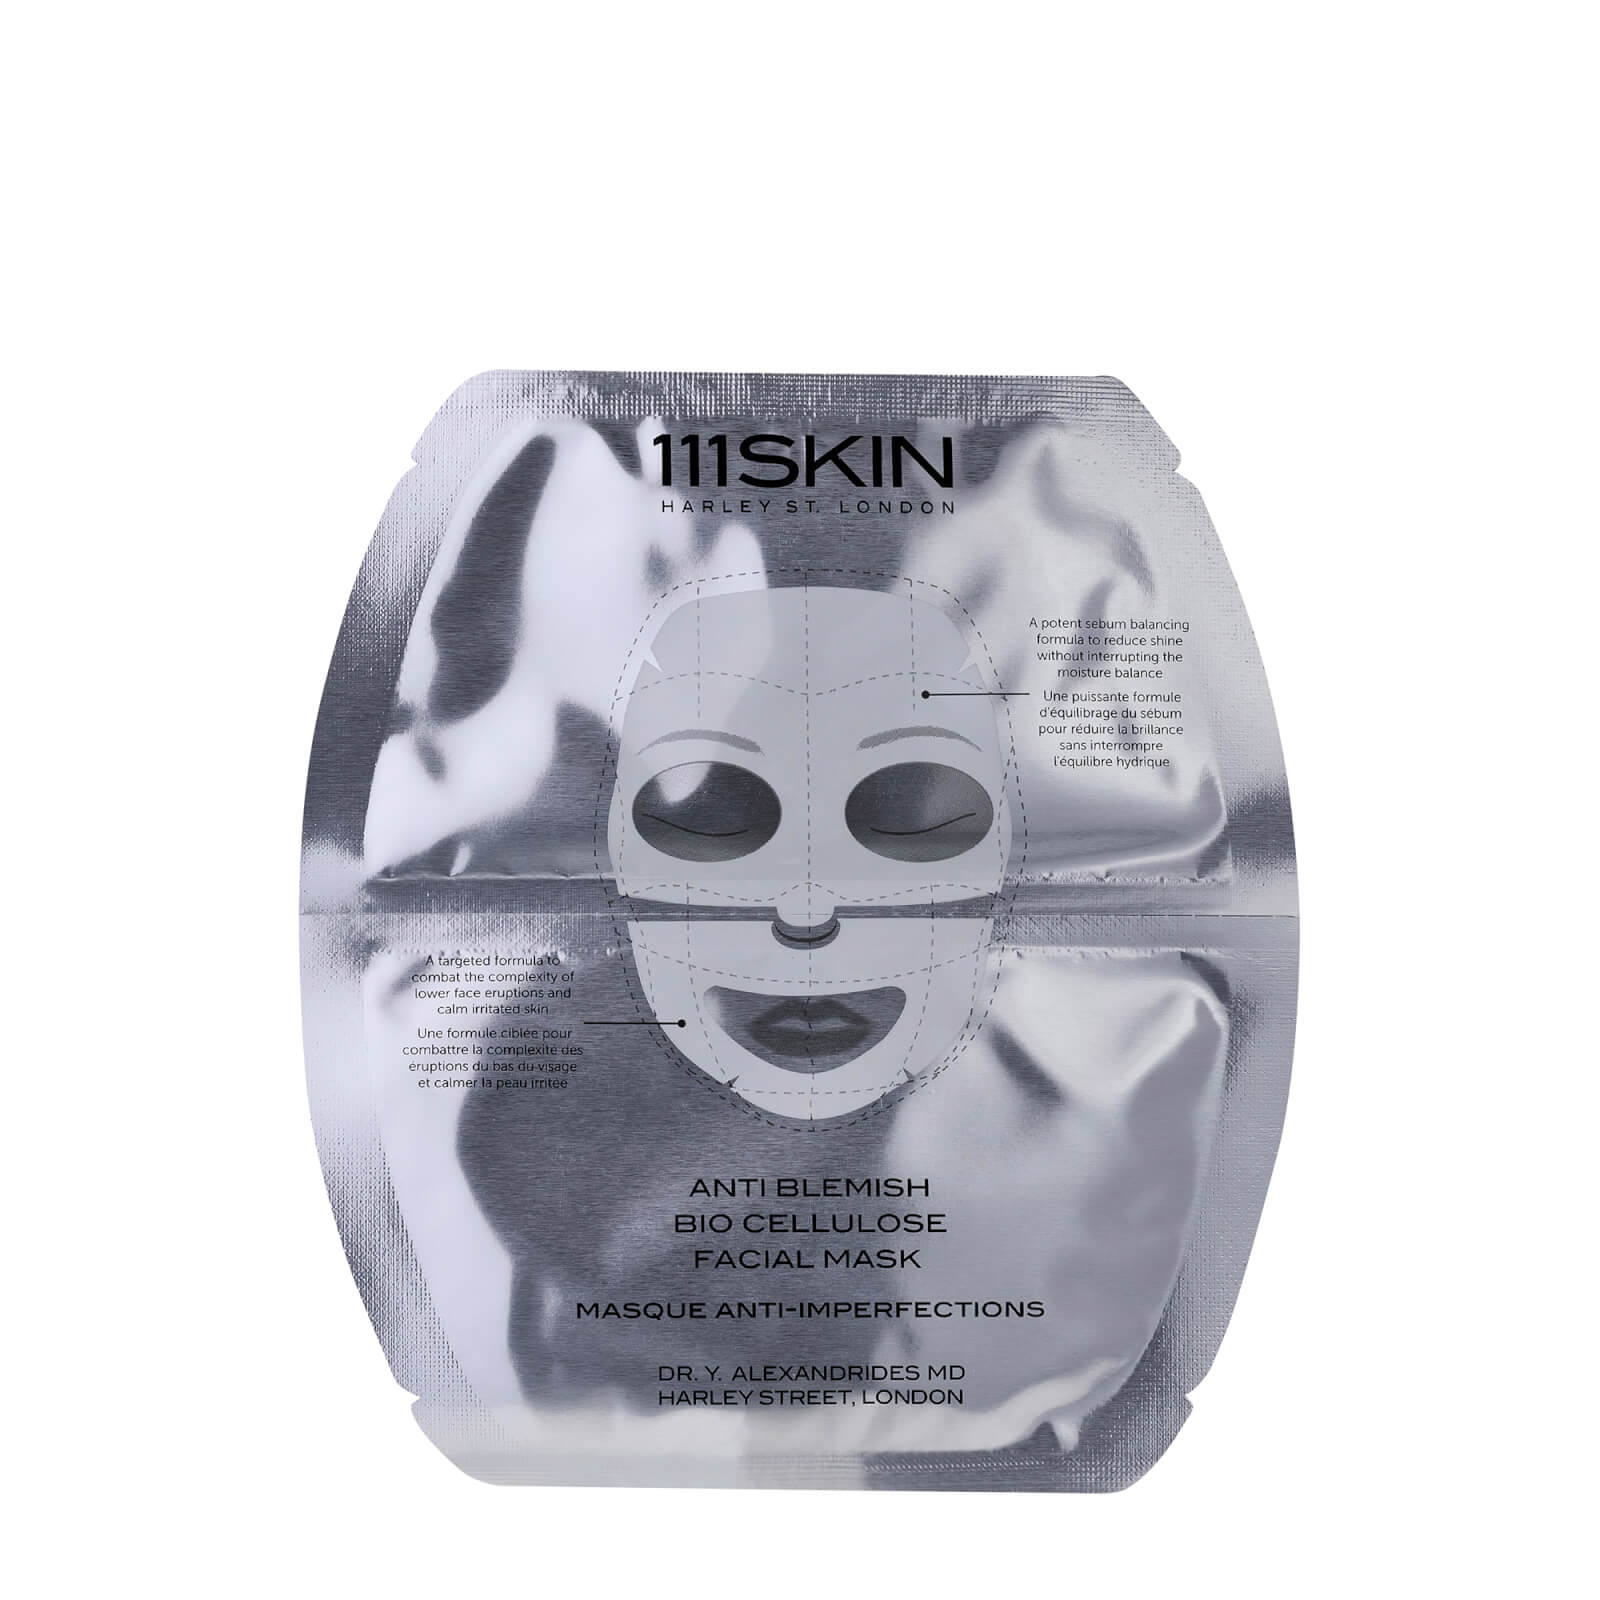 111skin Anti Blemish Bio Cellulose Facial Mask Single 0.78 oz In White